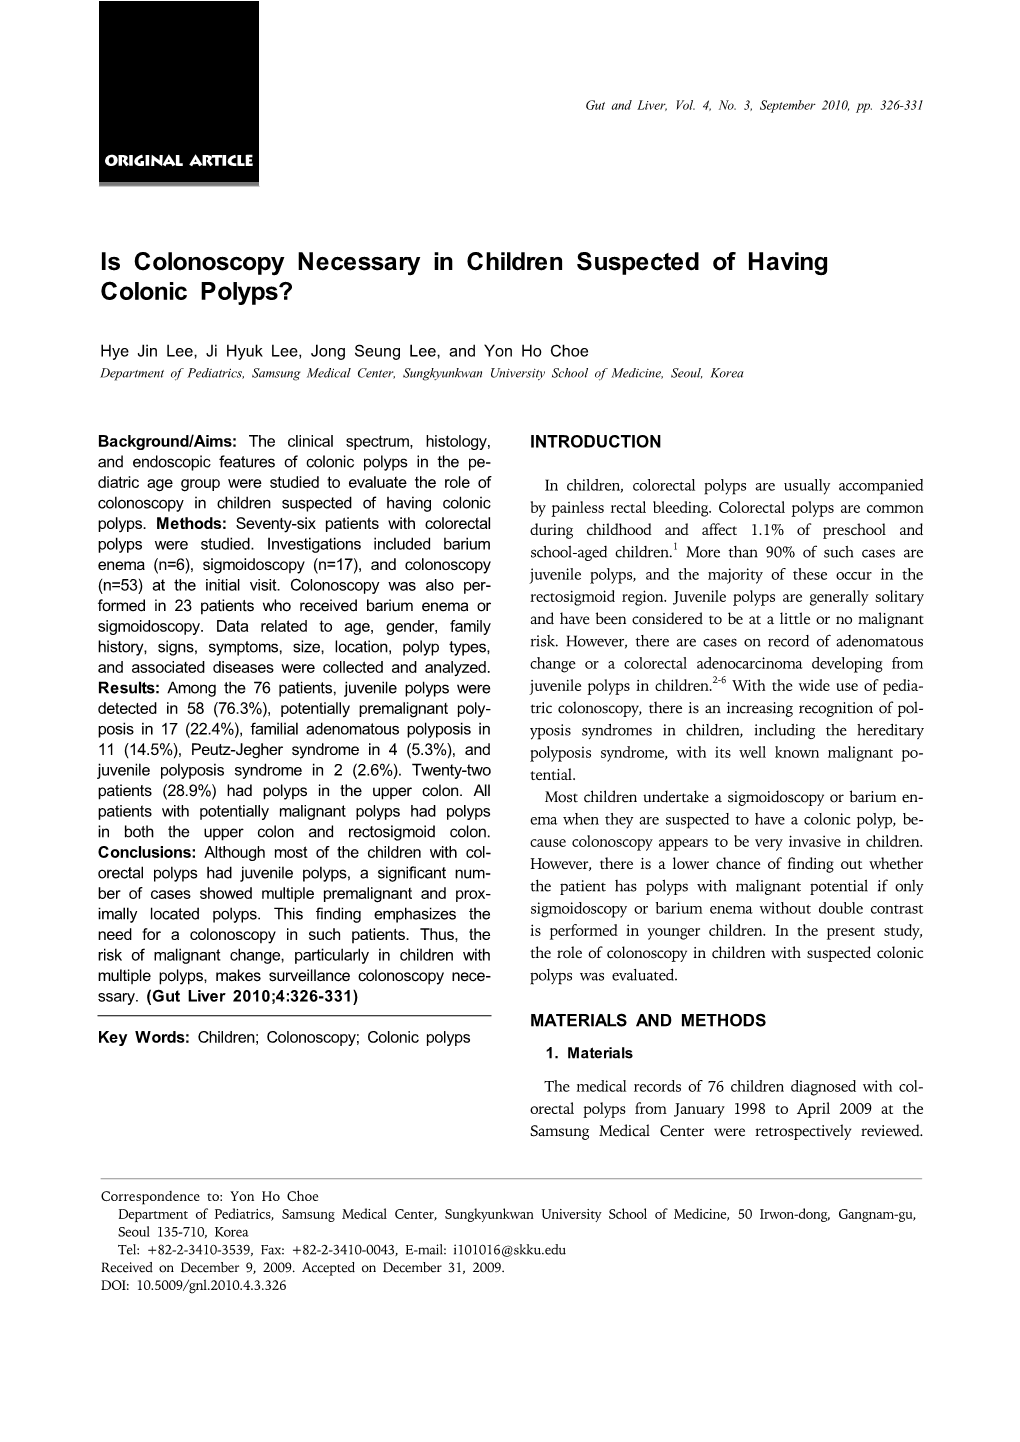 Is Colonoscopy Necessary in Children Suspected of Having Colonic Polyps?